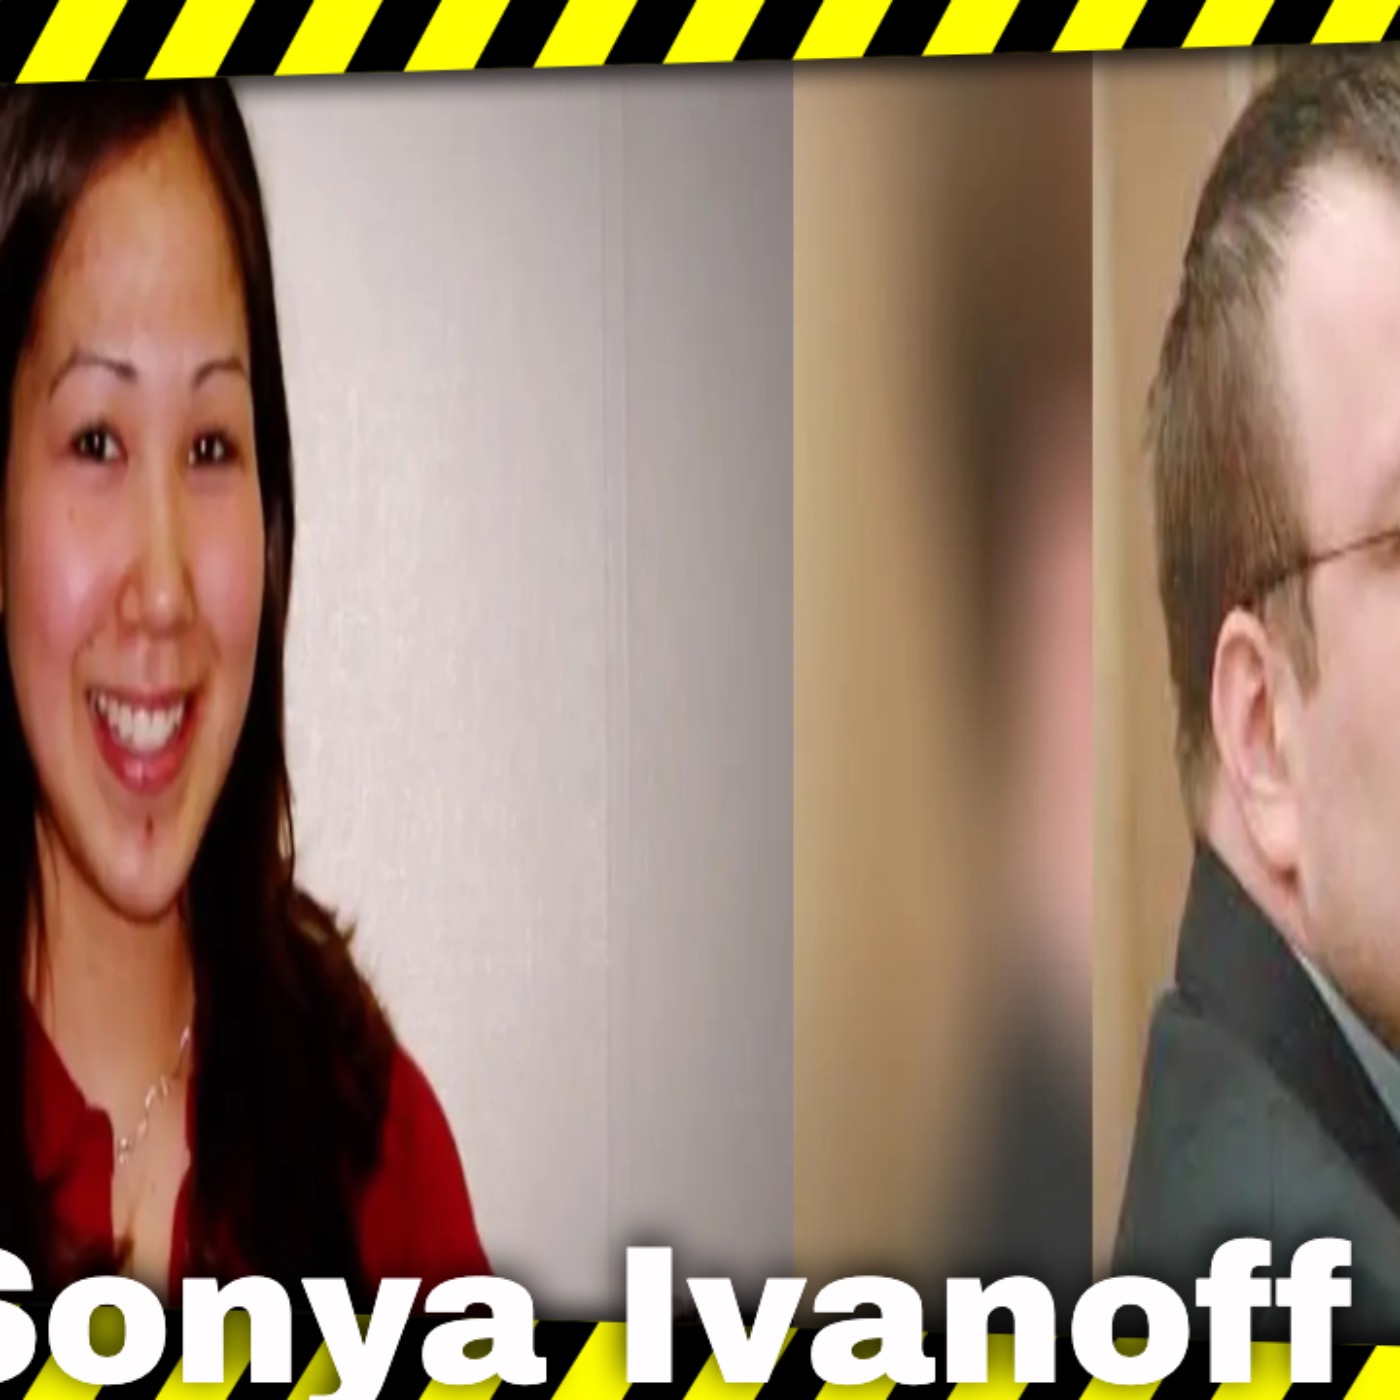 The Heartbreaking Story Of Sonya Ivanoff: Gone Too Soon